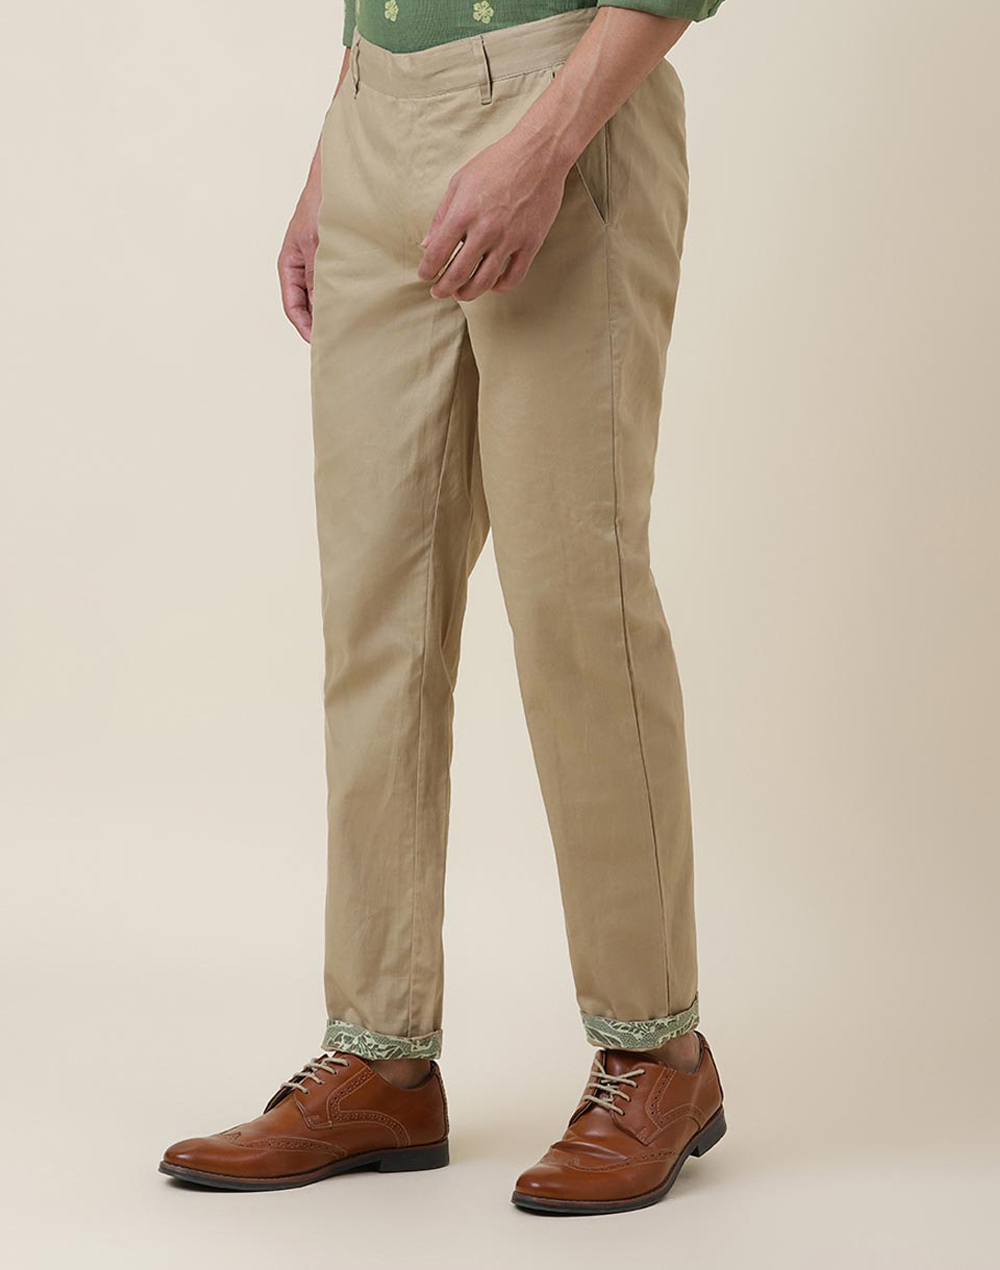 Buy Brown Cotton Pants for Men Online at Fabindia